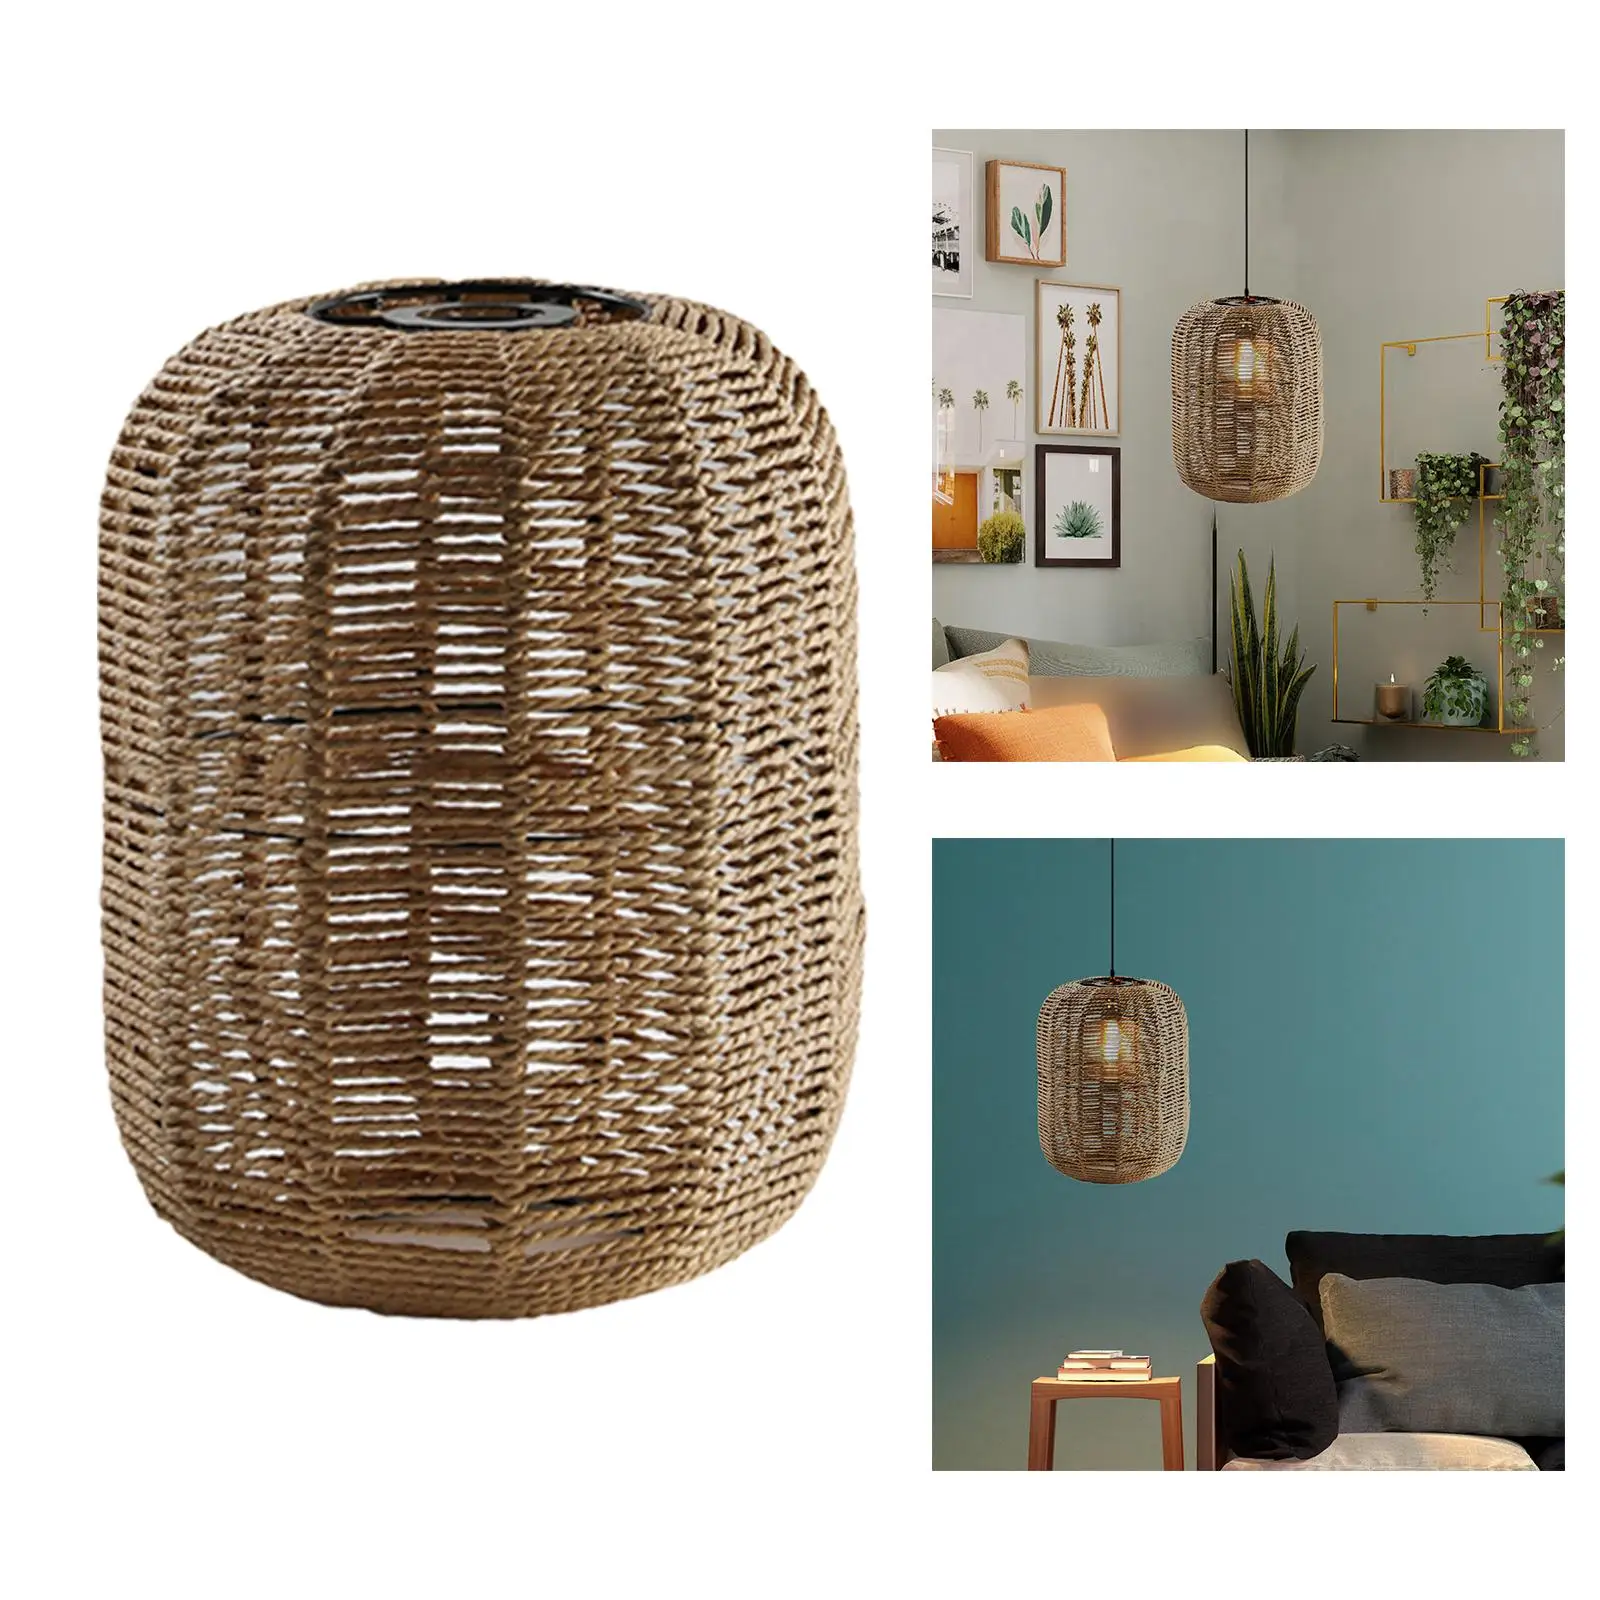 Boho Pendant Lamp Shade Woven Fixture Rope Ceiling Light Shade Chandelier Cover for Restaurant Hotel Bedroom Decor Teahouse